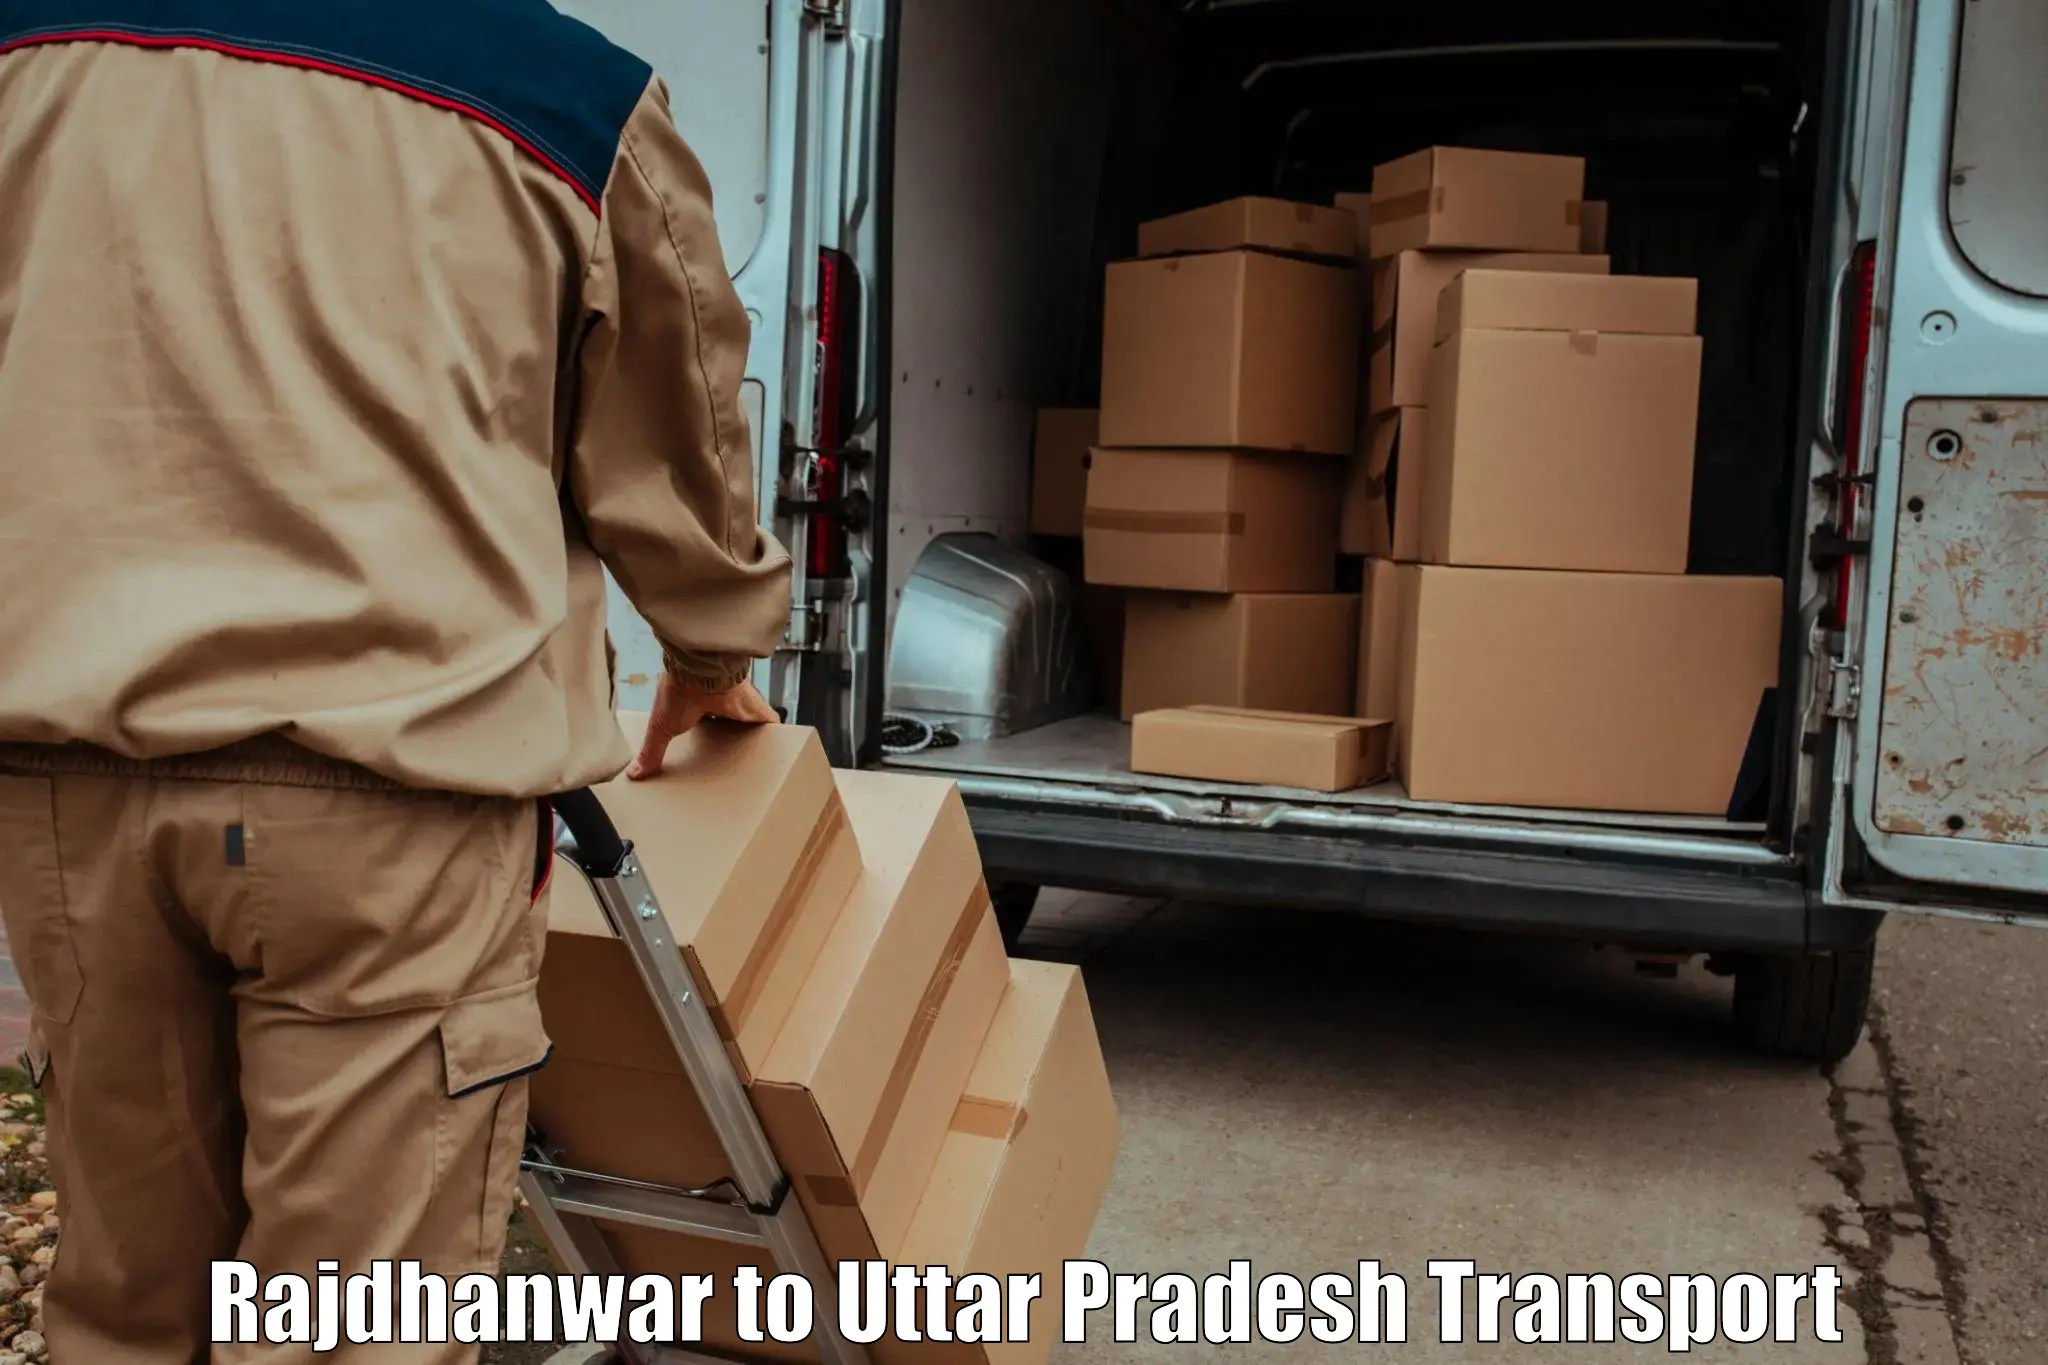 Truck transport companies in India Rajdhanwar to Pilkhuwa